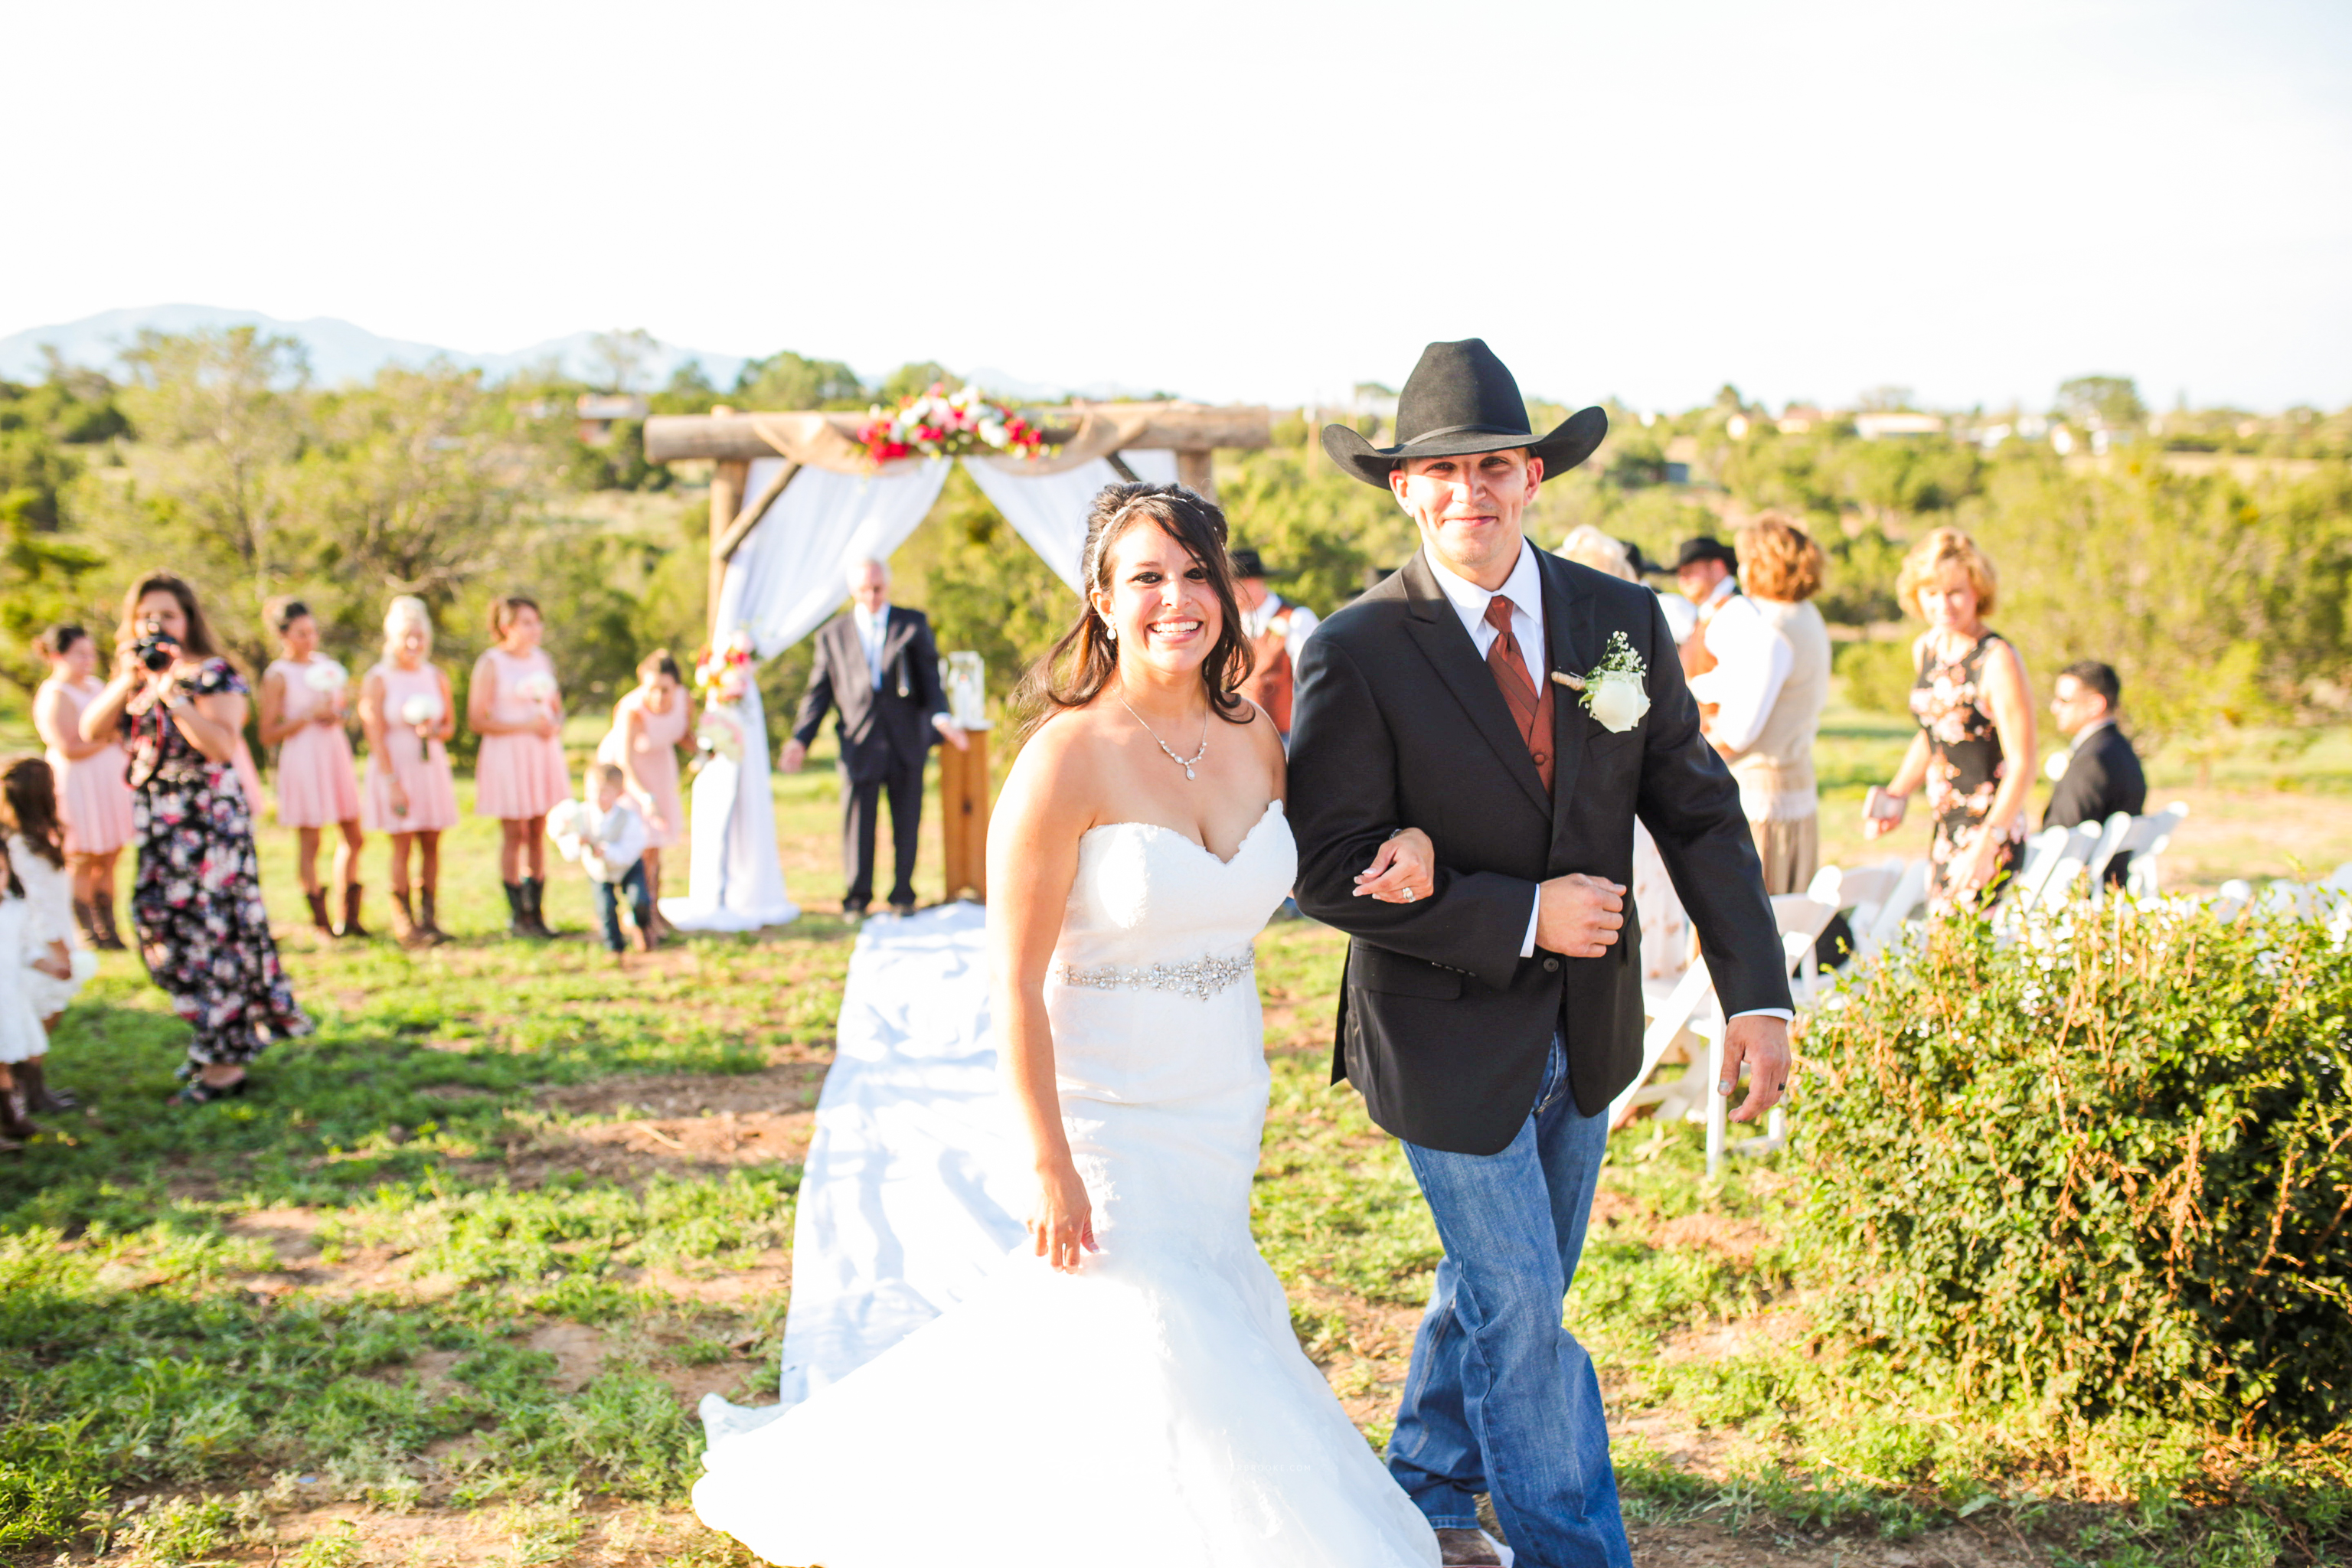 Edgewood New Mexico_Country Wedding Photographer_www.tylerbrooke.com_Kate Kauffman (14 of 35)